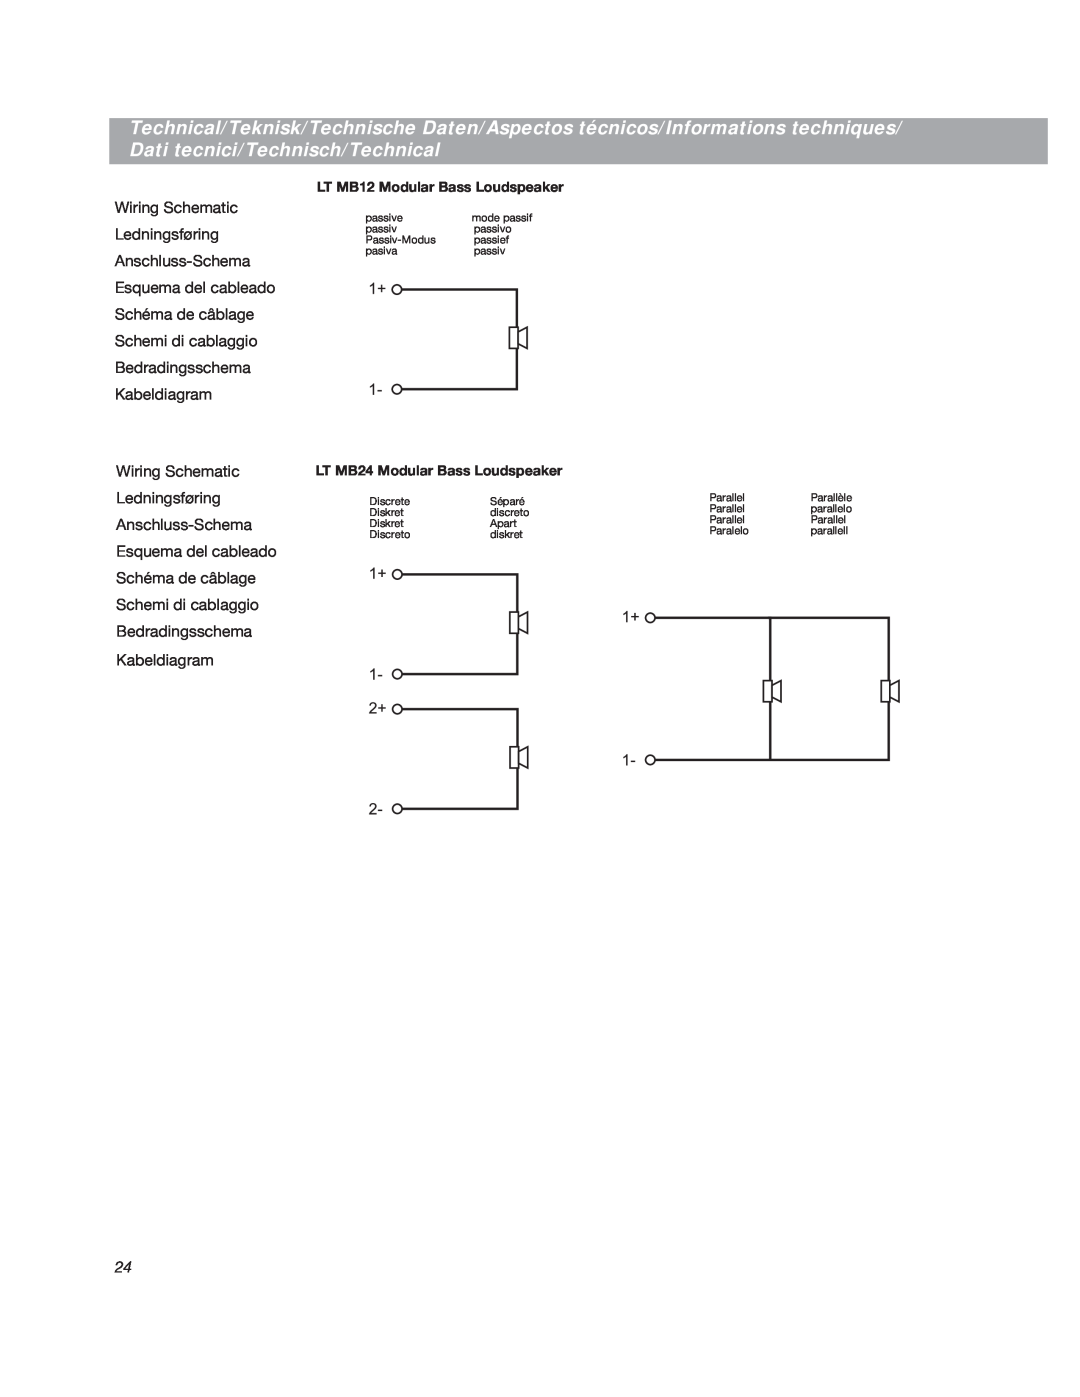 Bose LT3202 Wiring Schematic, Ledningsføring, Anschluss-Schema, Esquema del cableado, Schéma de câblage, Bedradingsschema 